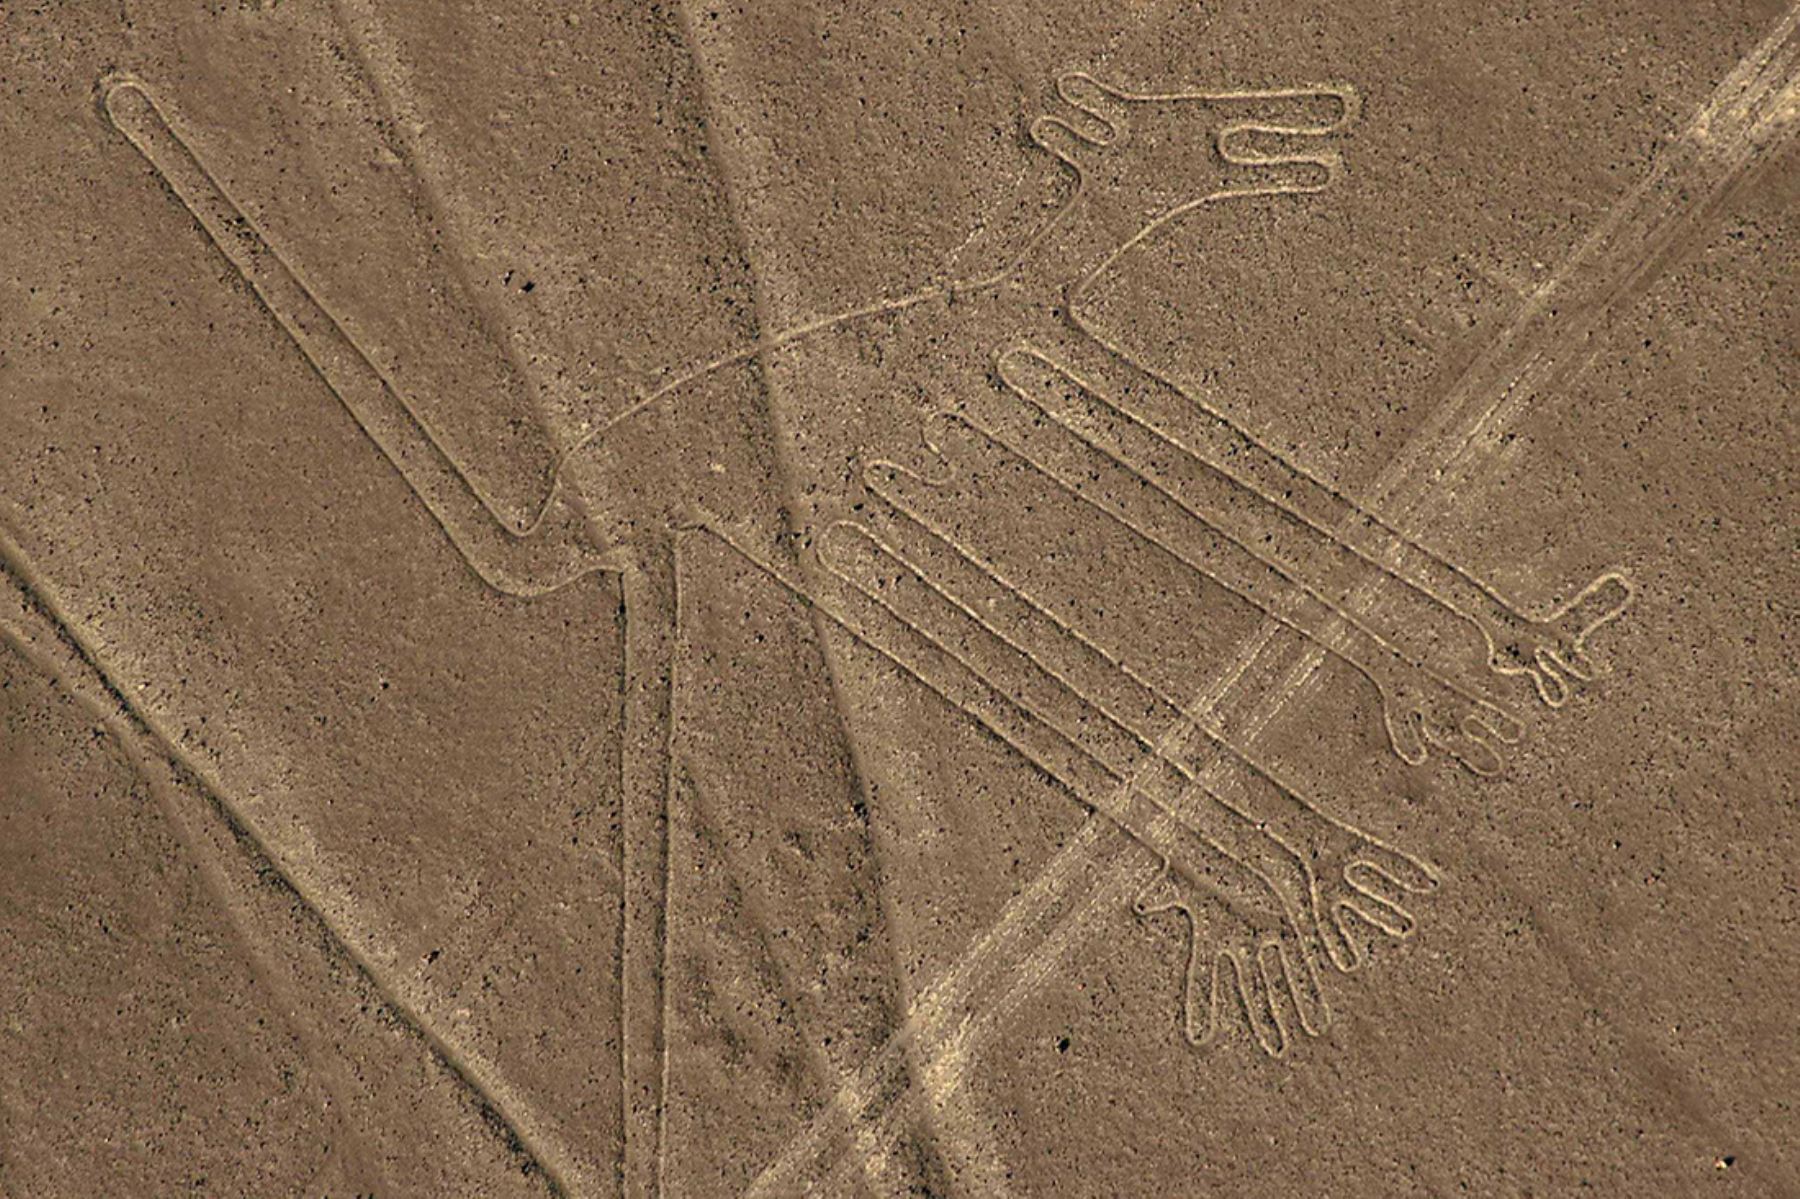  Nazca Lines, Peru